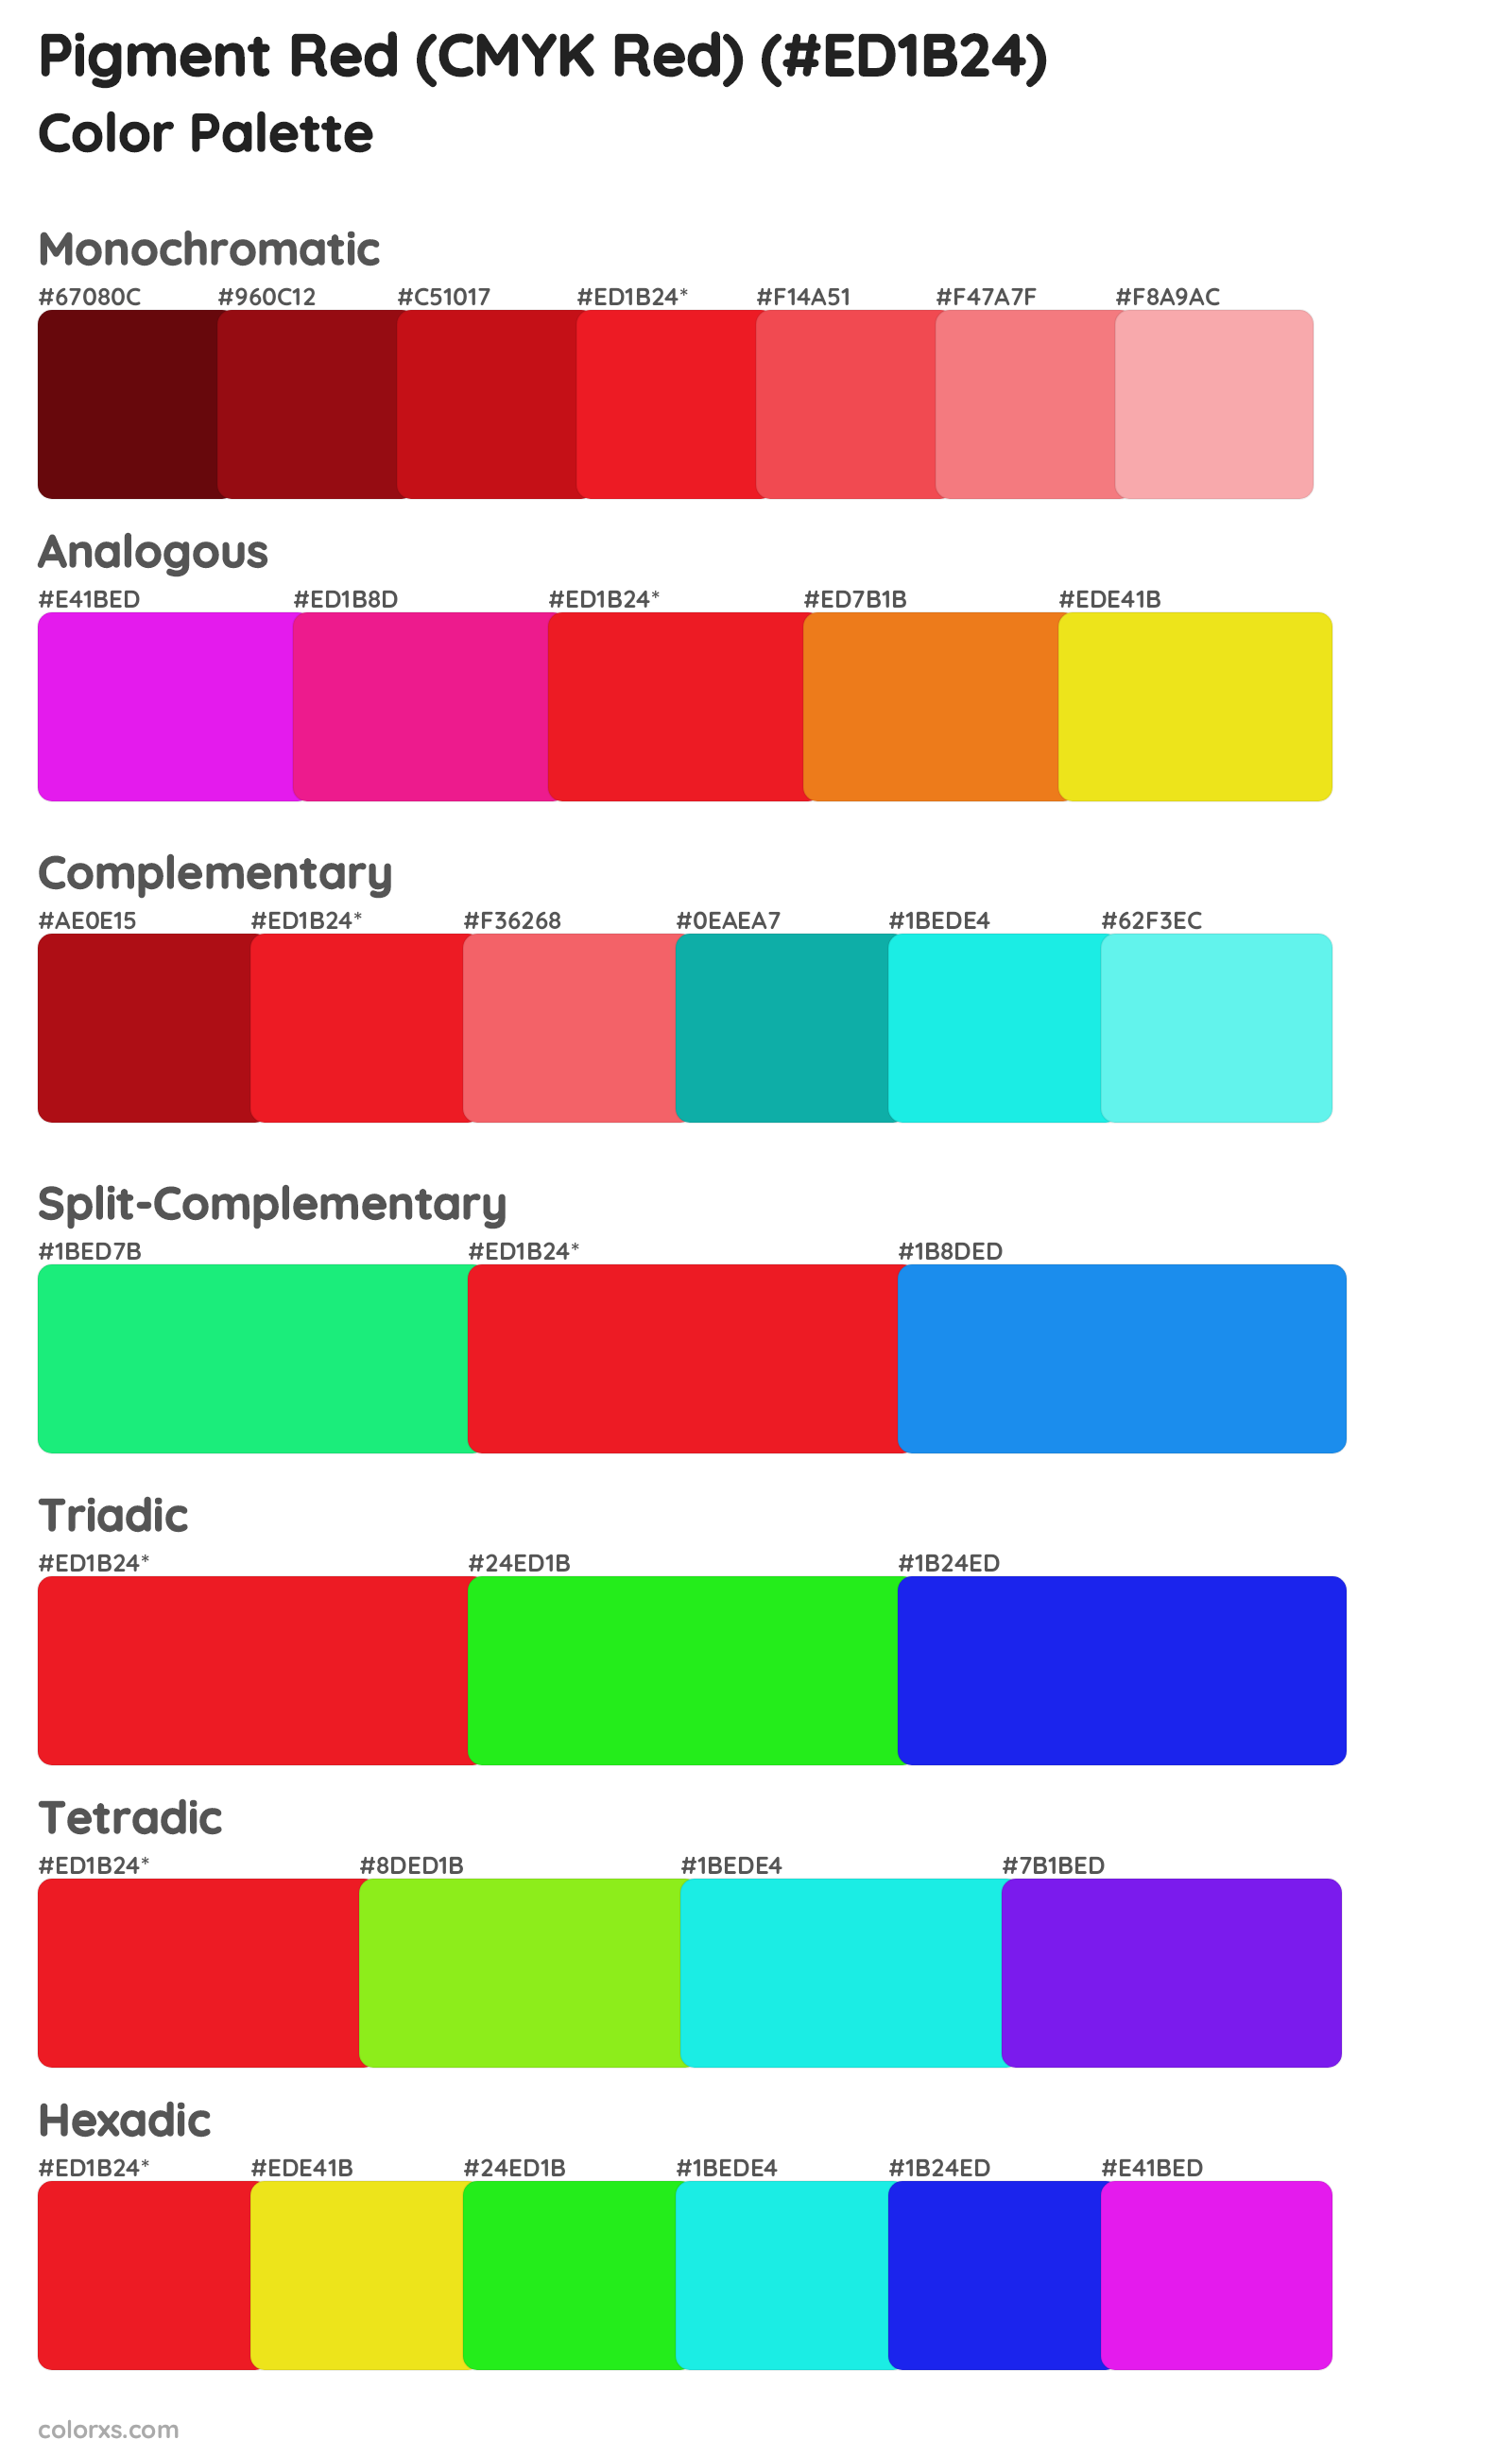 Pigment Red (CMYK Red) Color Scheme Palettes